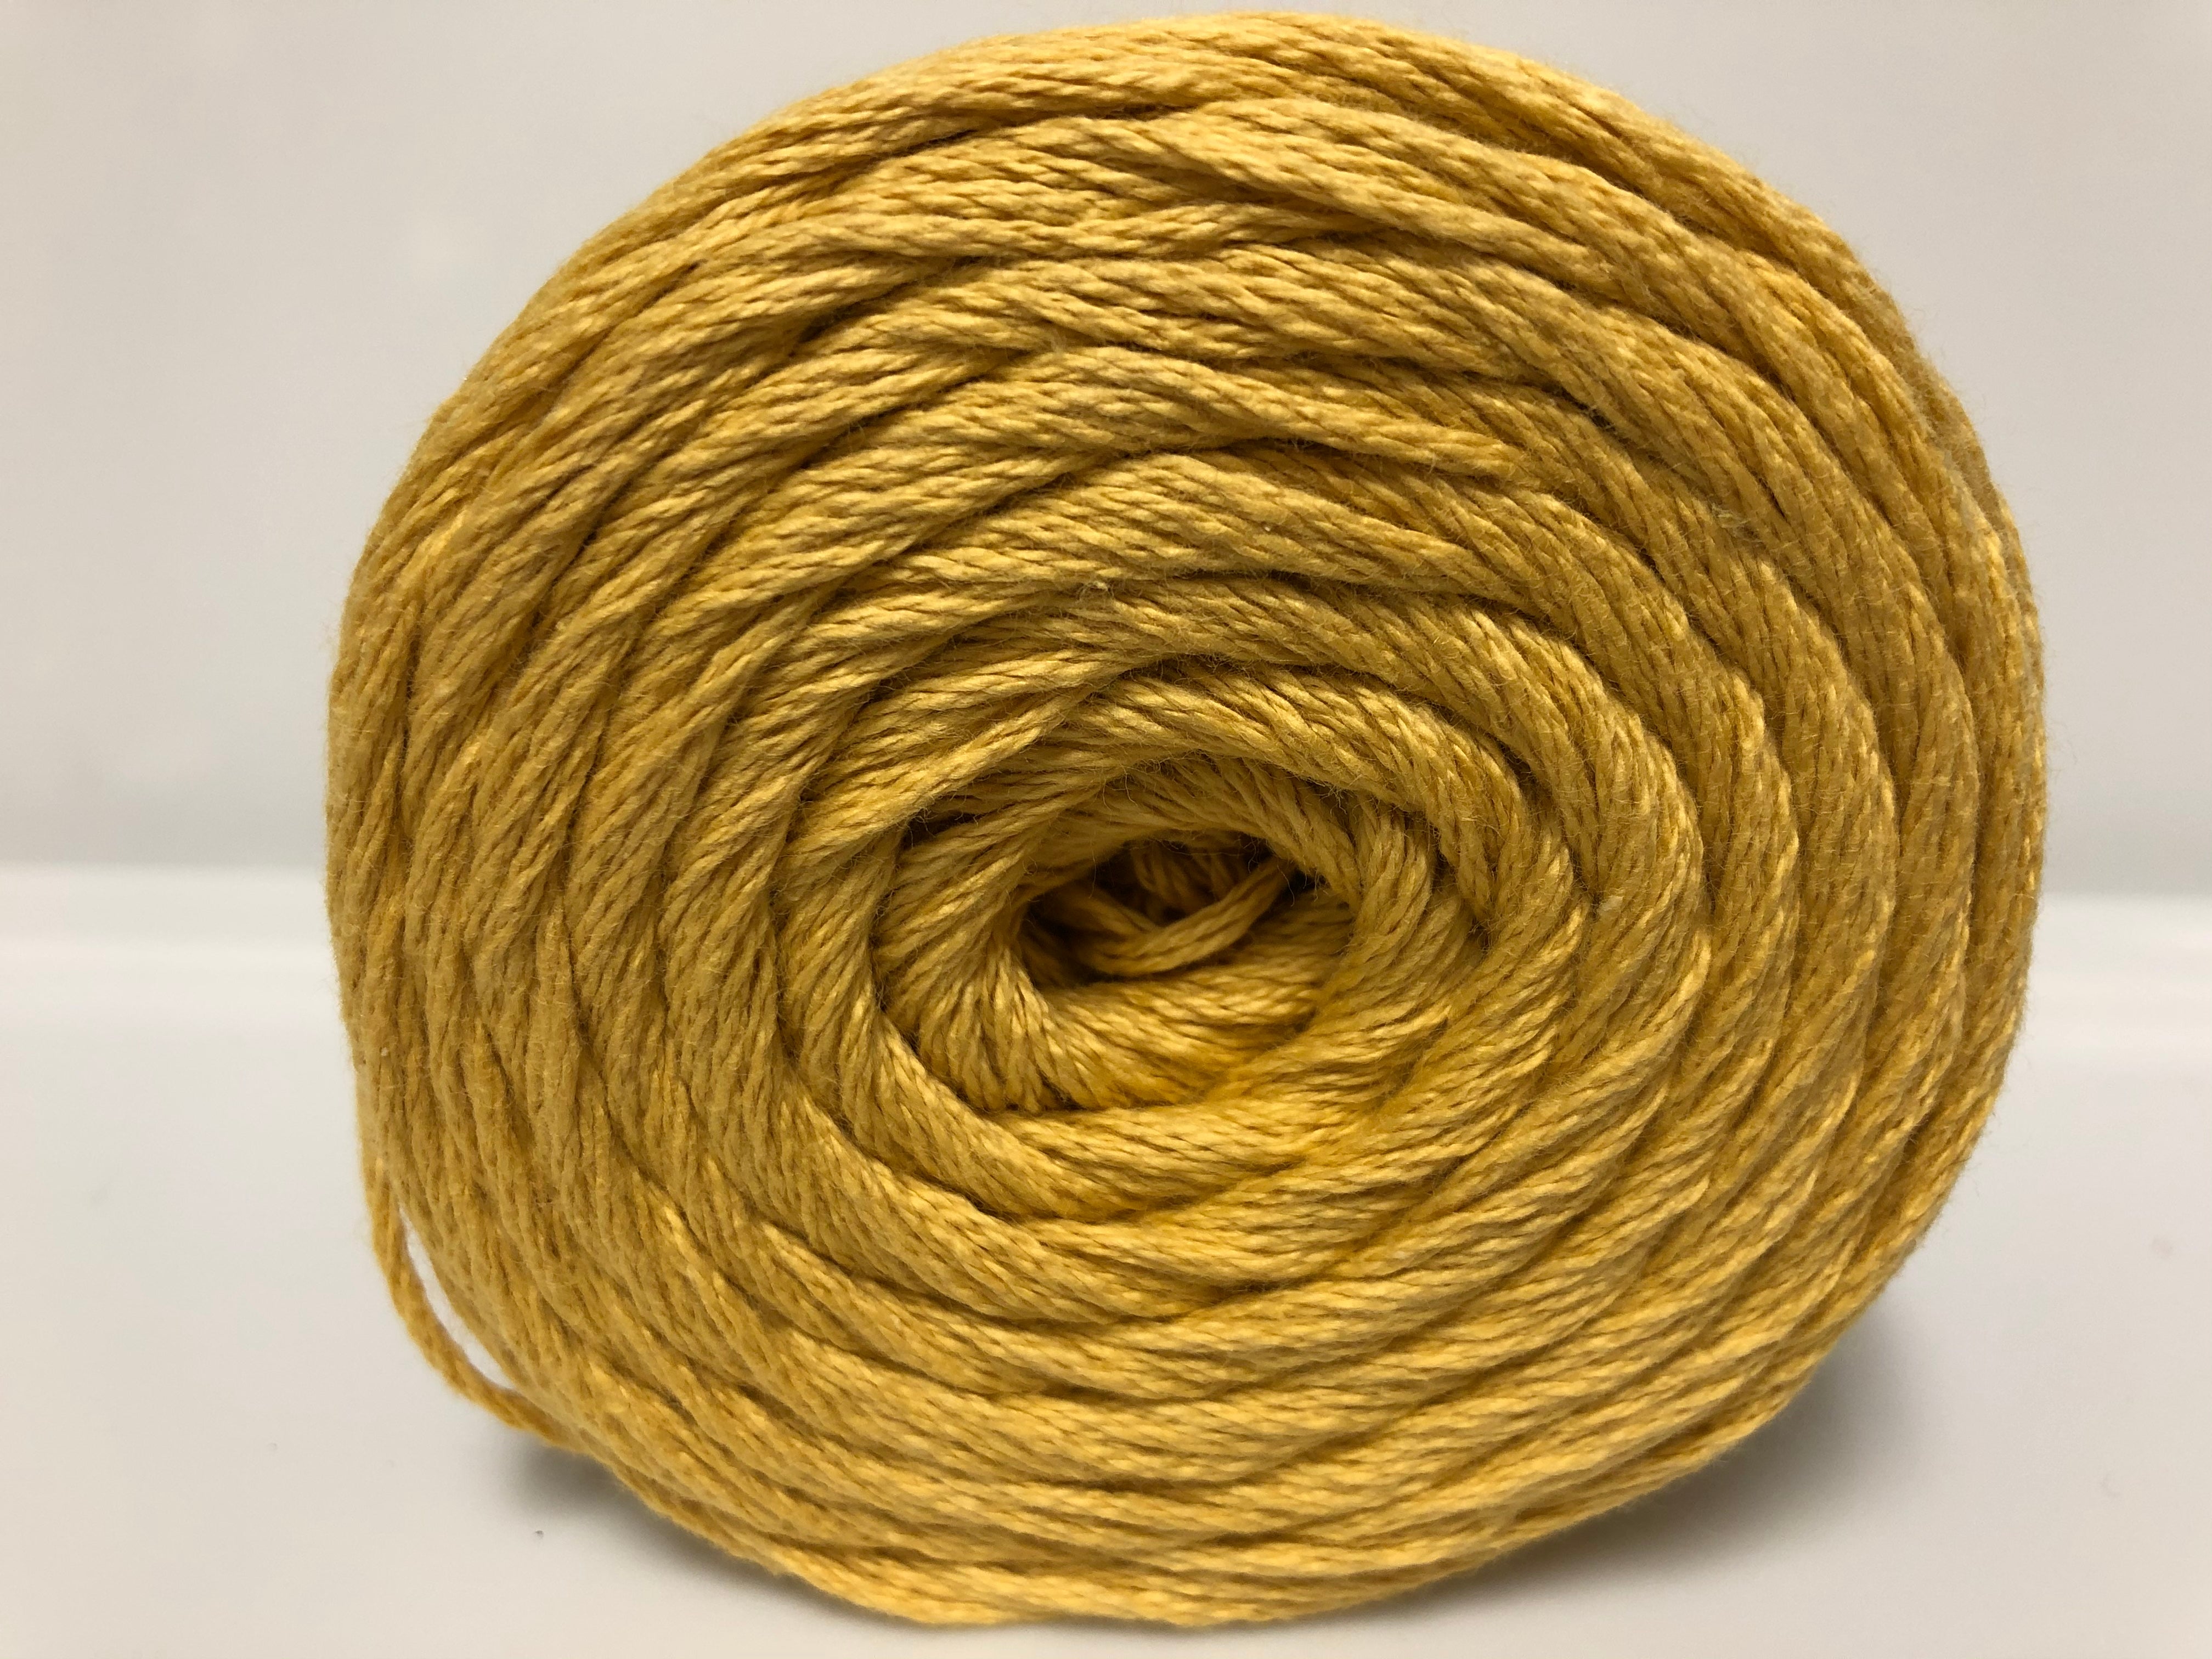 Appalachian Baby Chunky Cotton Natural Yarn